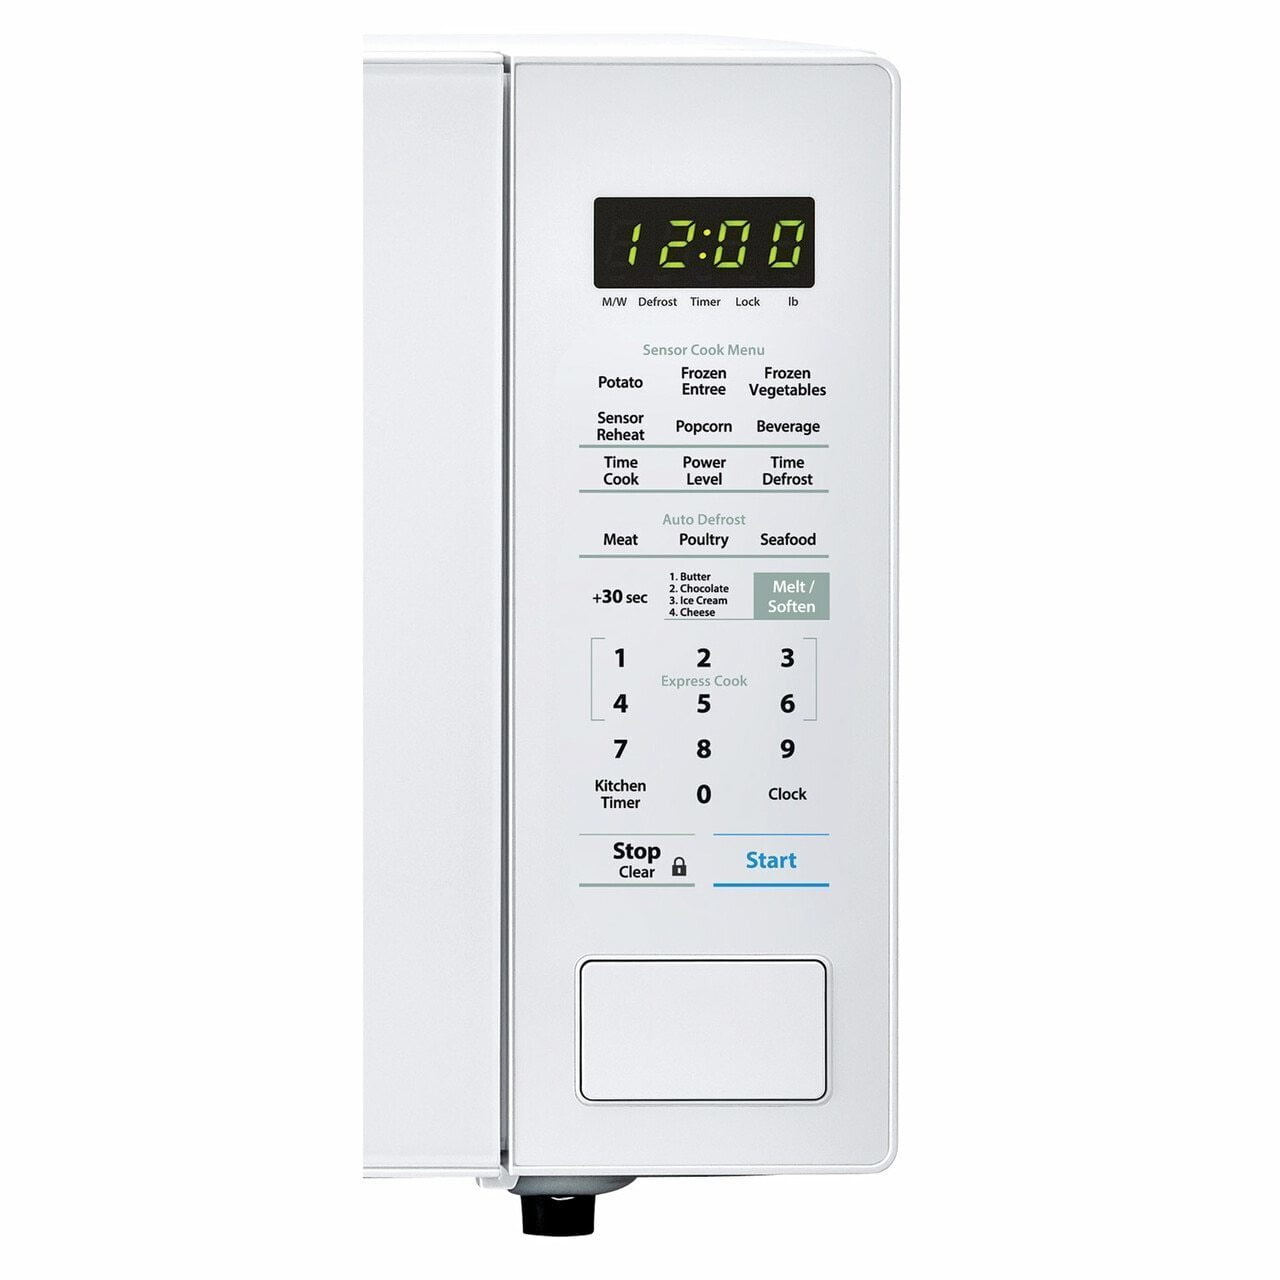 Sharp SMC1441CW 1.4 Cu. Ft. 1000W Sharp White Countertop Microwave Oven